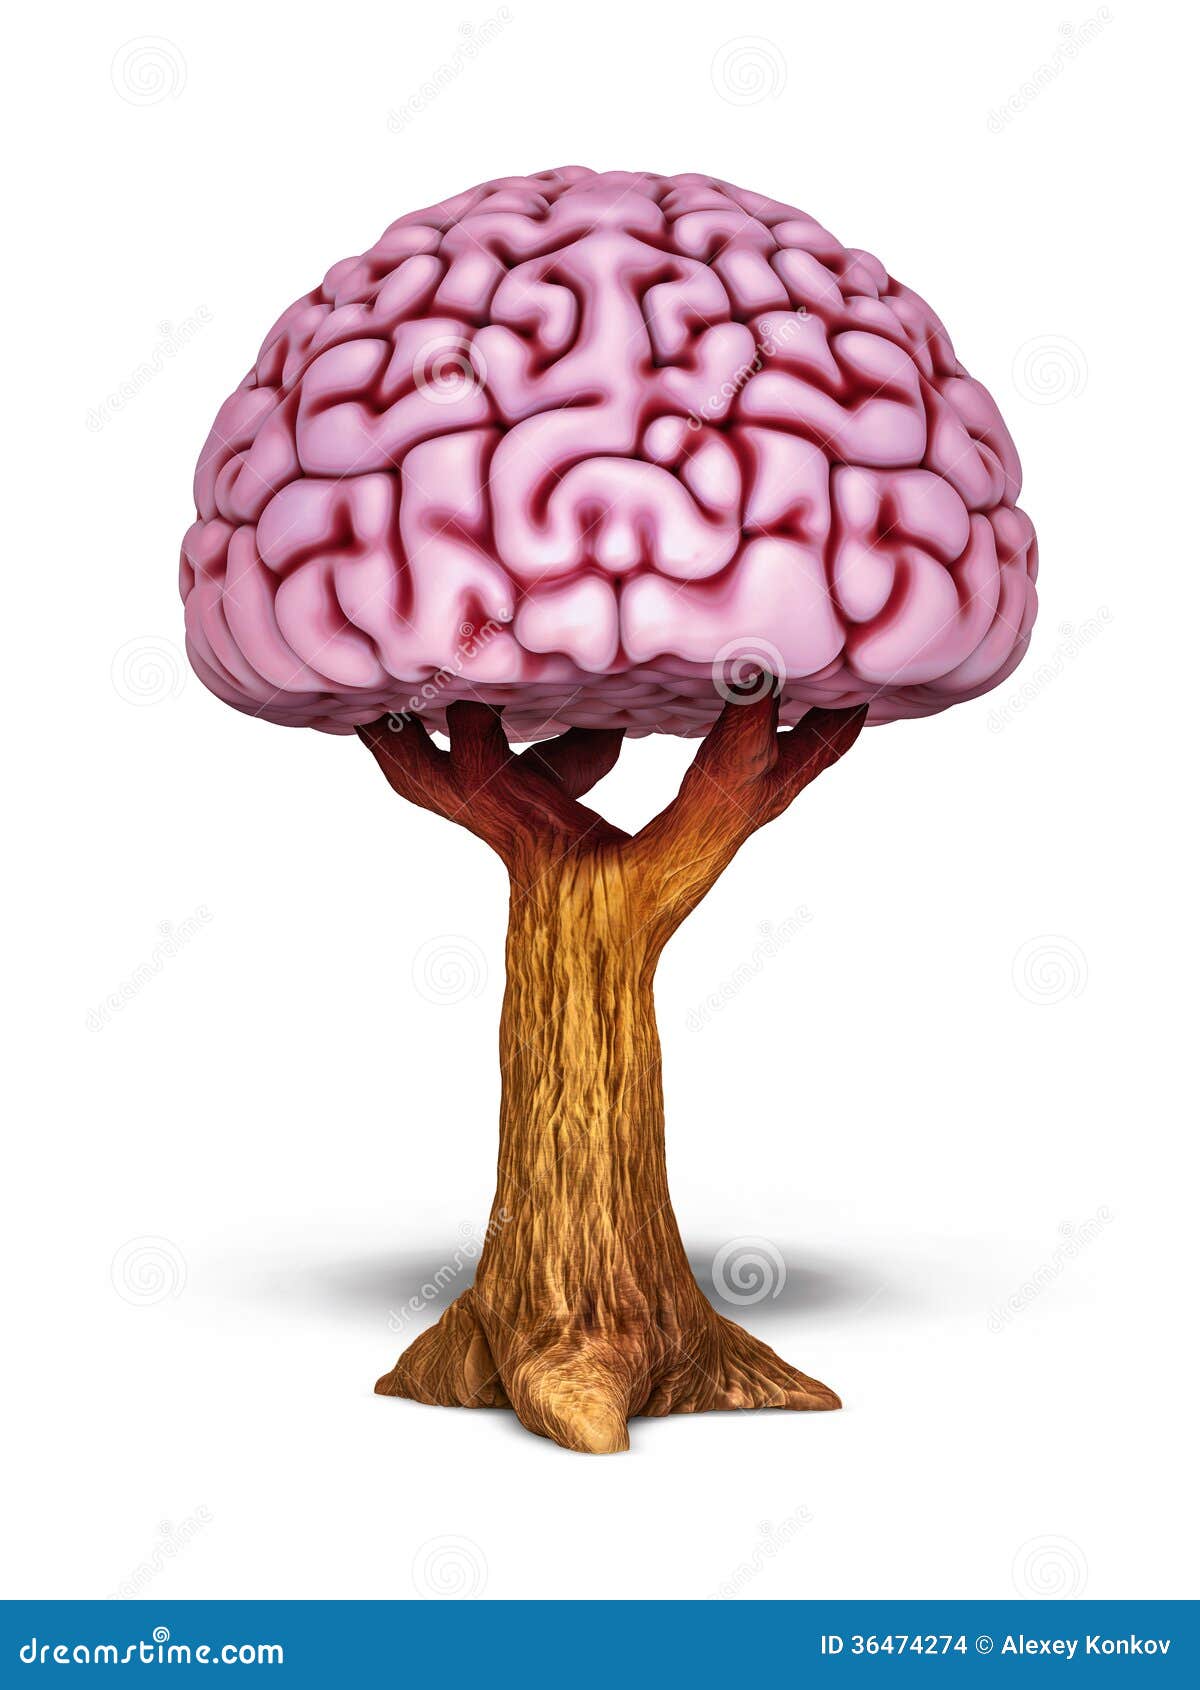 Brain Tree Illustration Stock Images - Image: 364742741065 x 1300